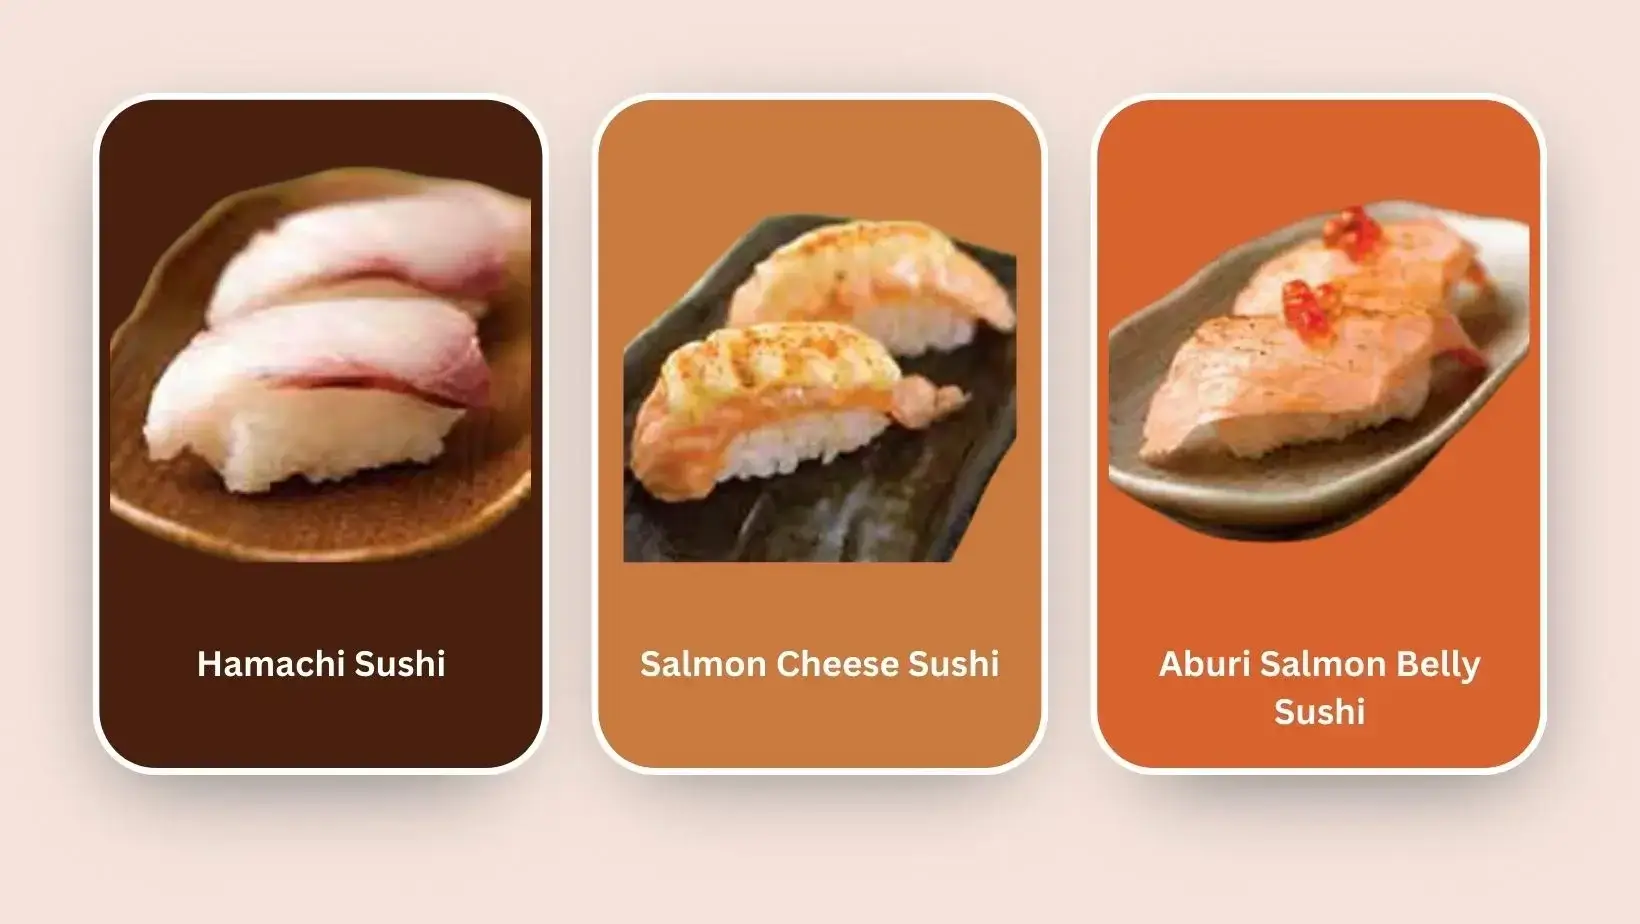 Hamachi Sushi Salmon Cheese Sushi and Aburi Salmon Belly Sushi